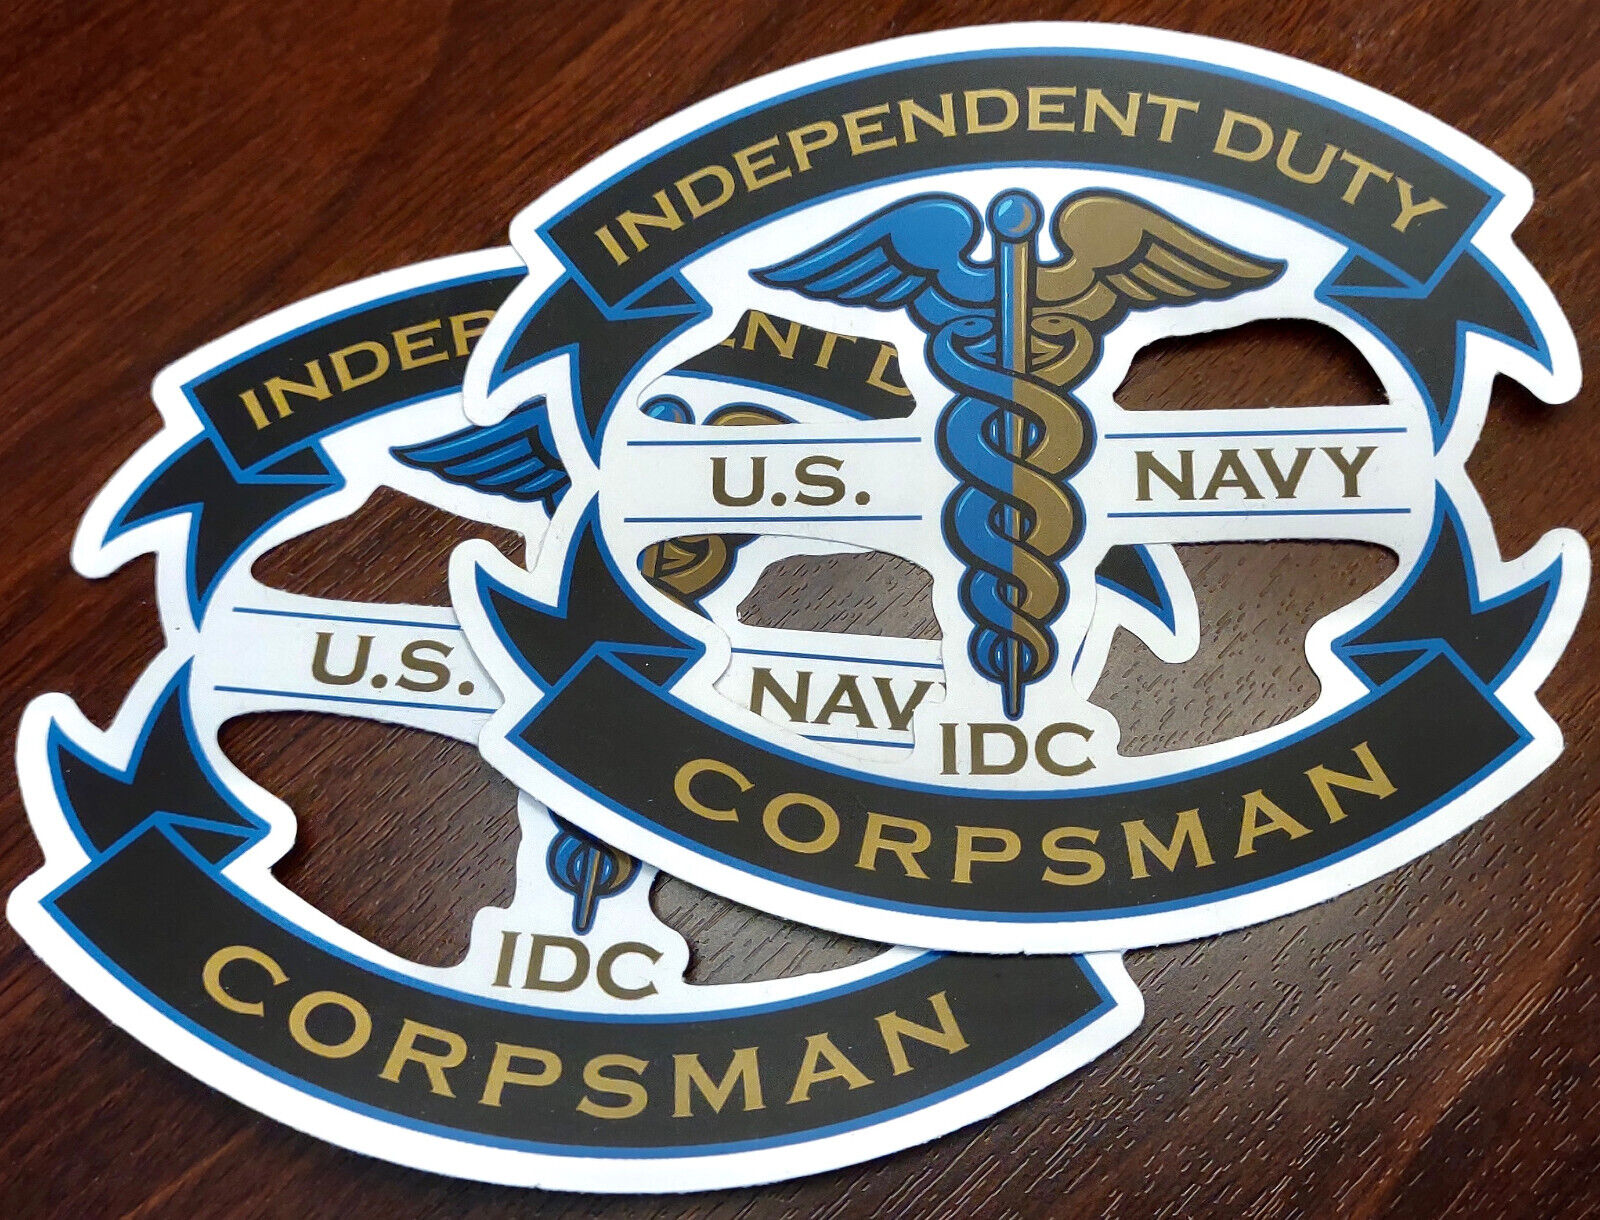 Elite Fleet US Navy Independent Duty Hospital Corpsman IDC Stickers Fleet Shore